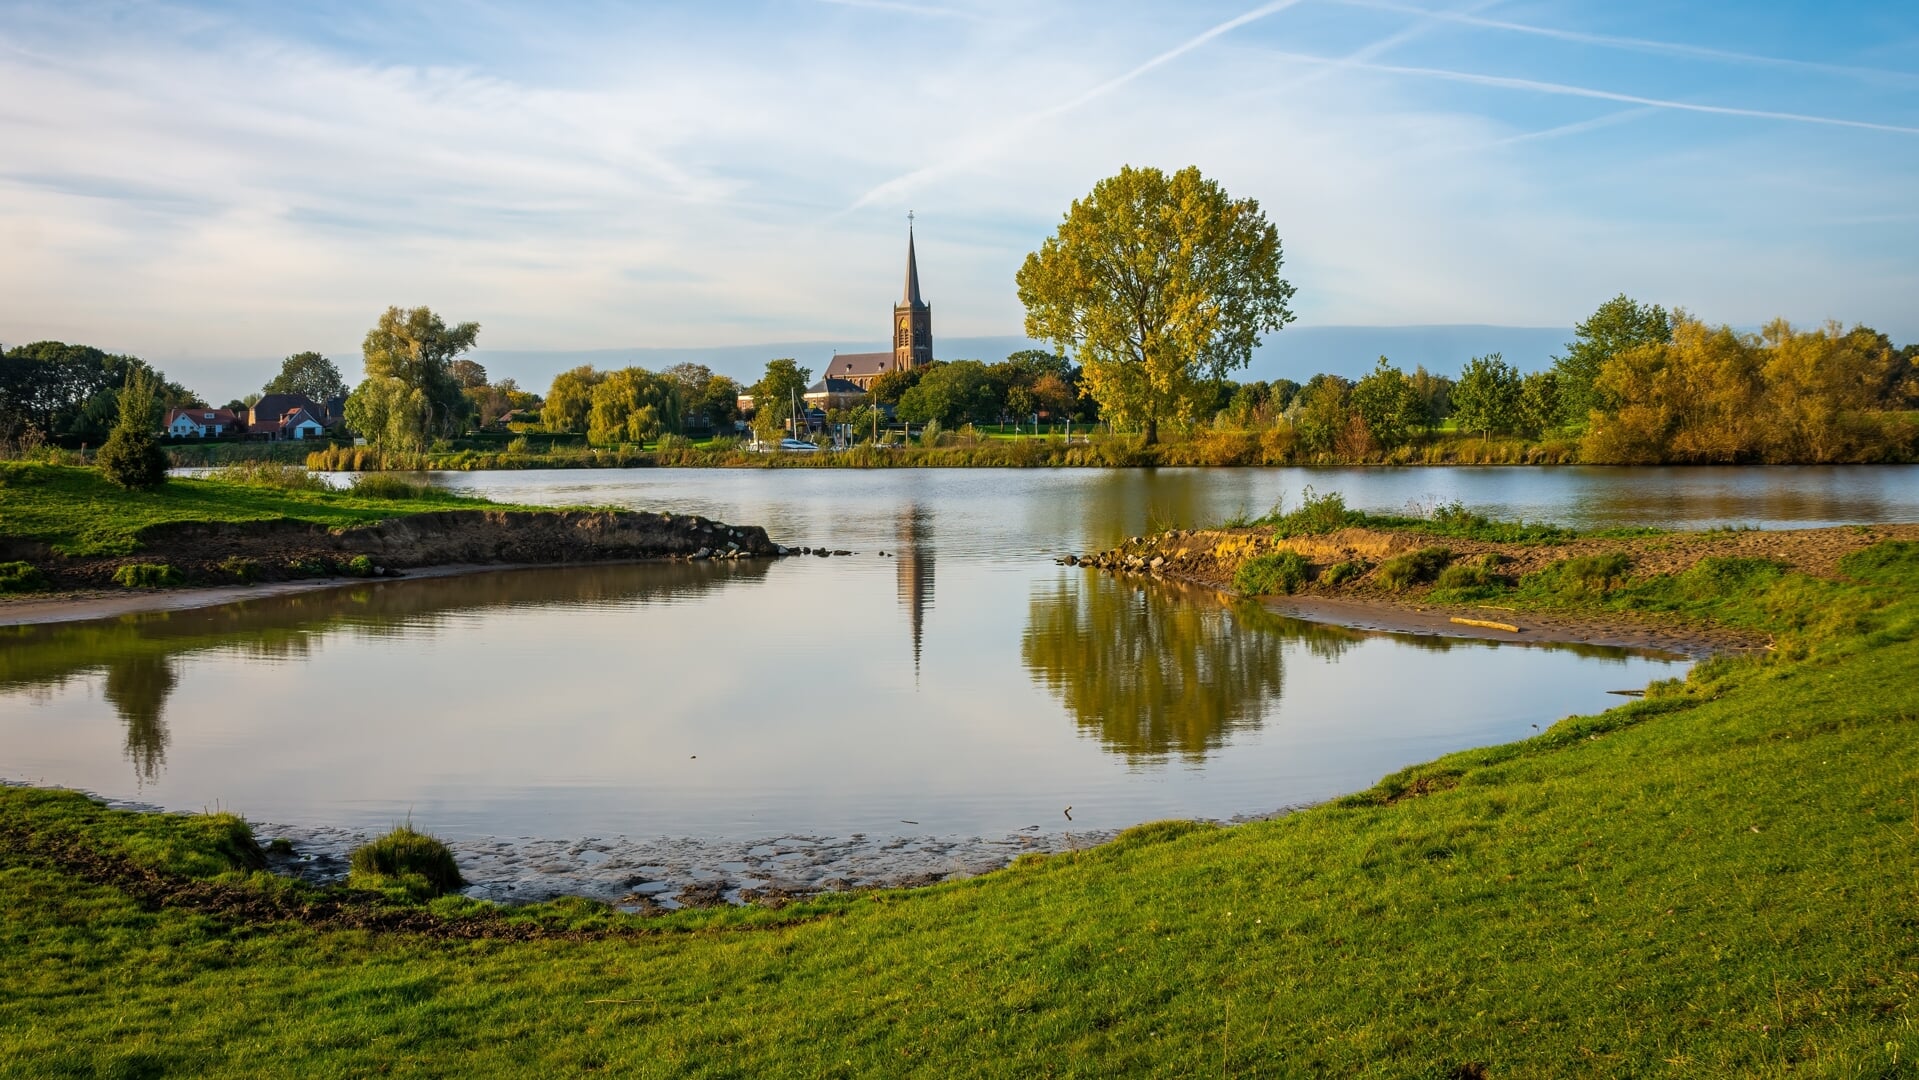  Gelderland wordt steeds populairder. Foto: Shutterstock 